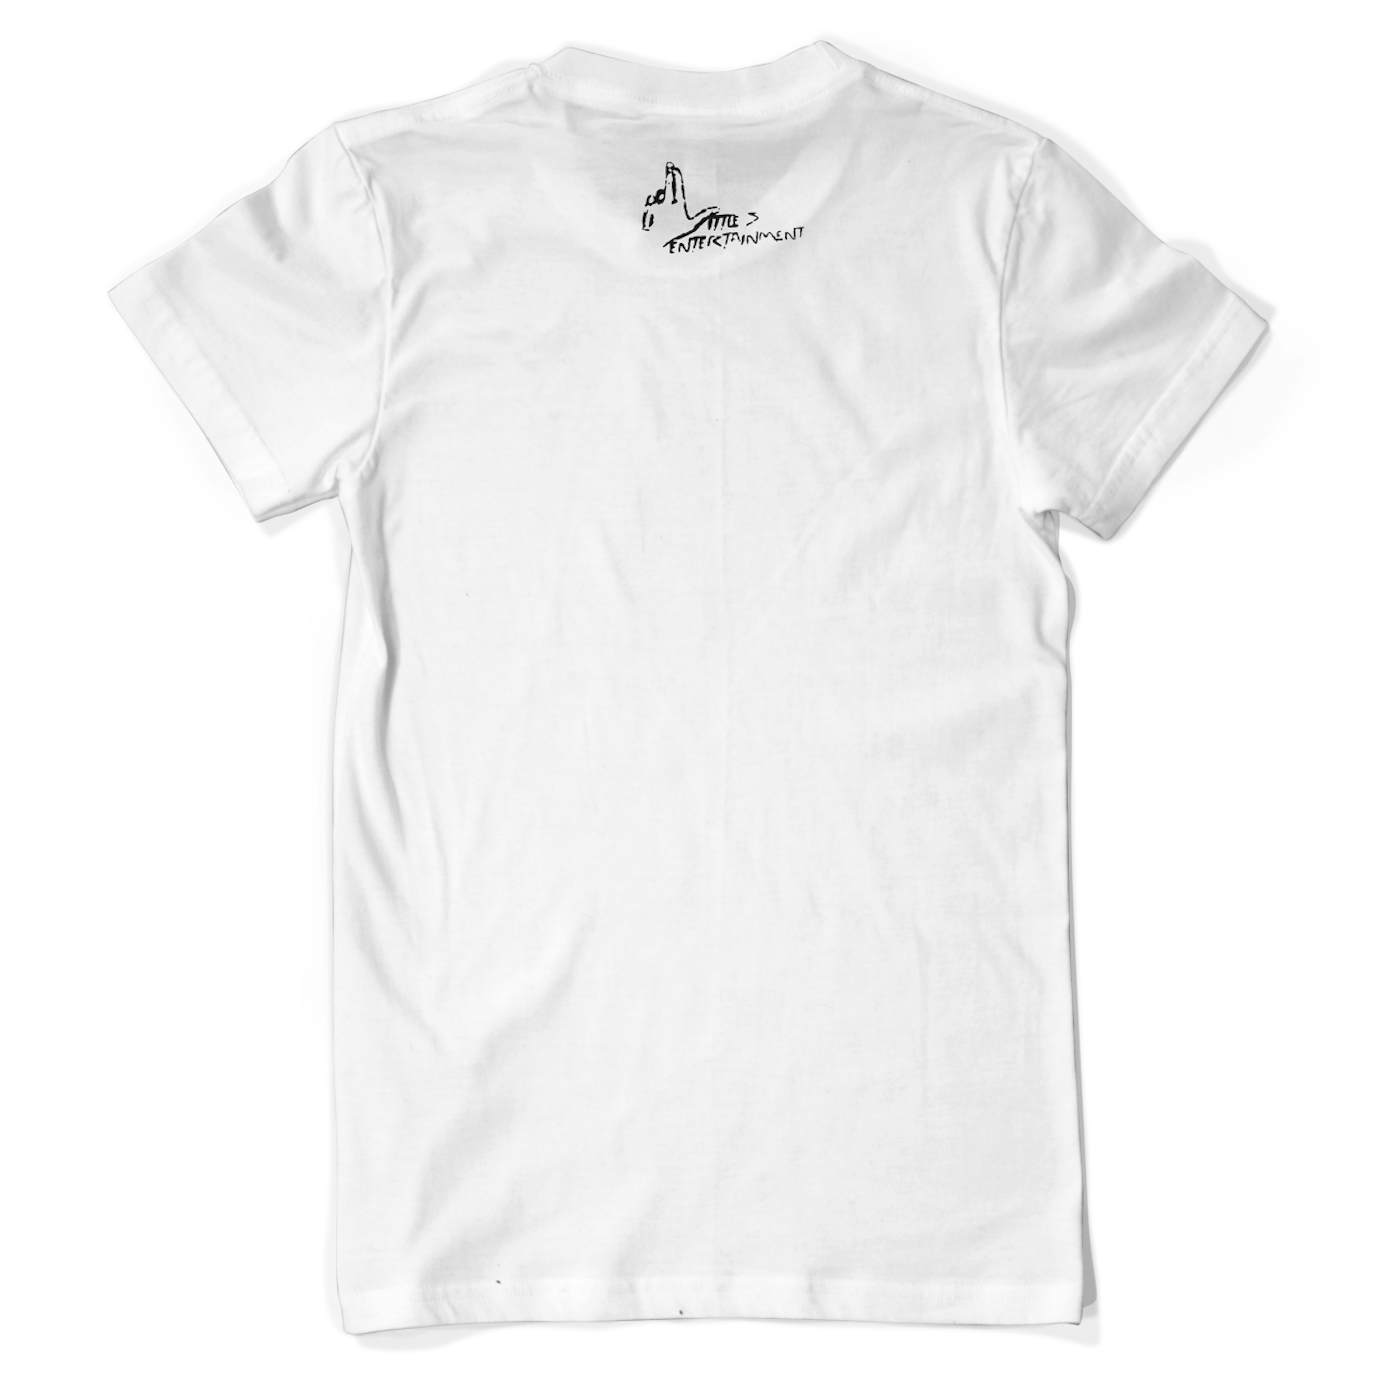 Tay Way - White / Black T-Shirt